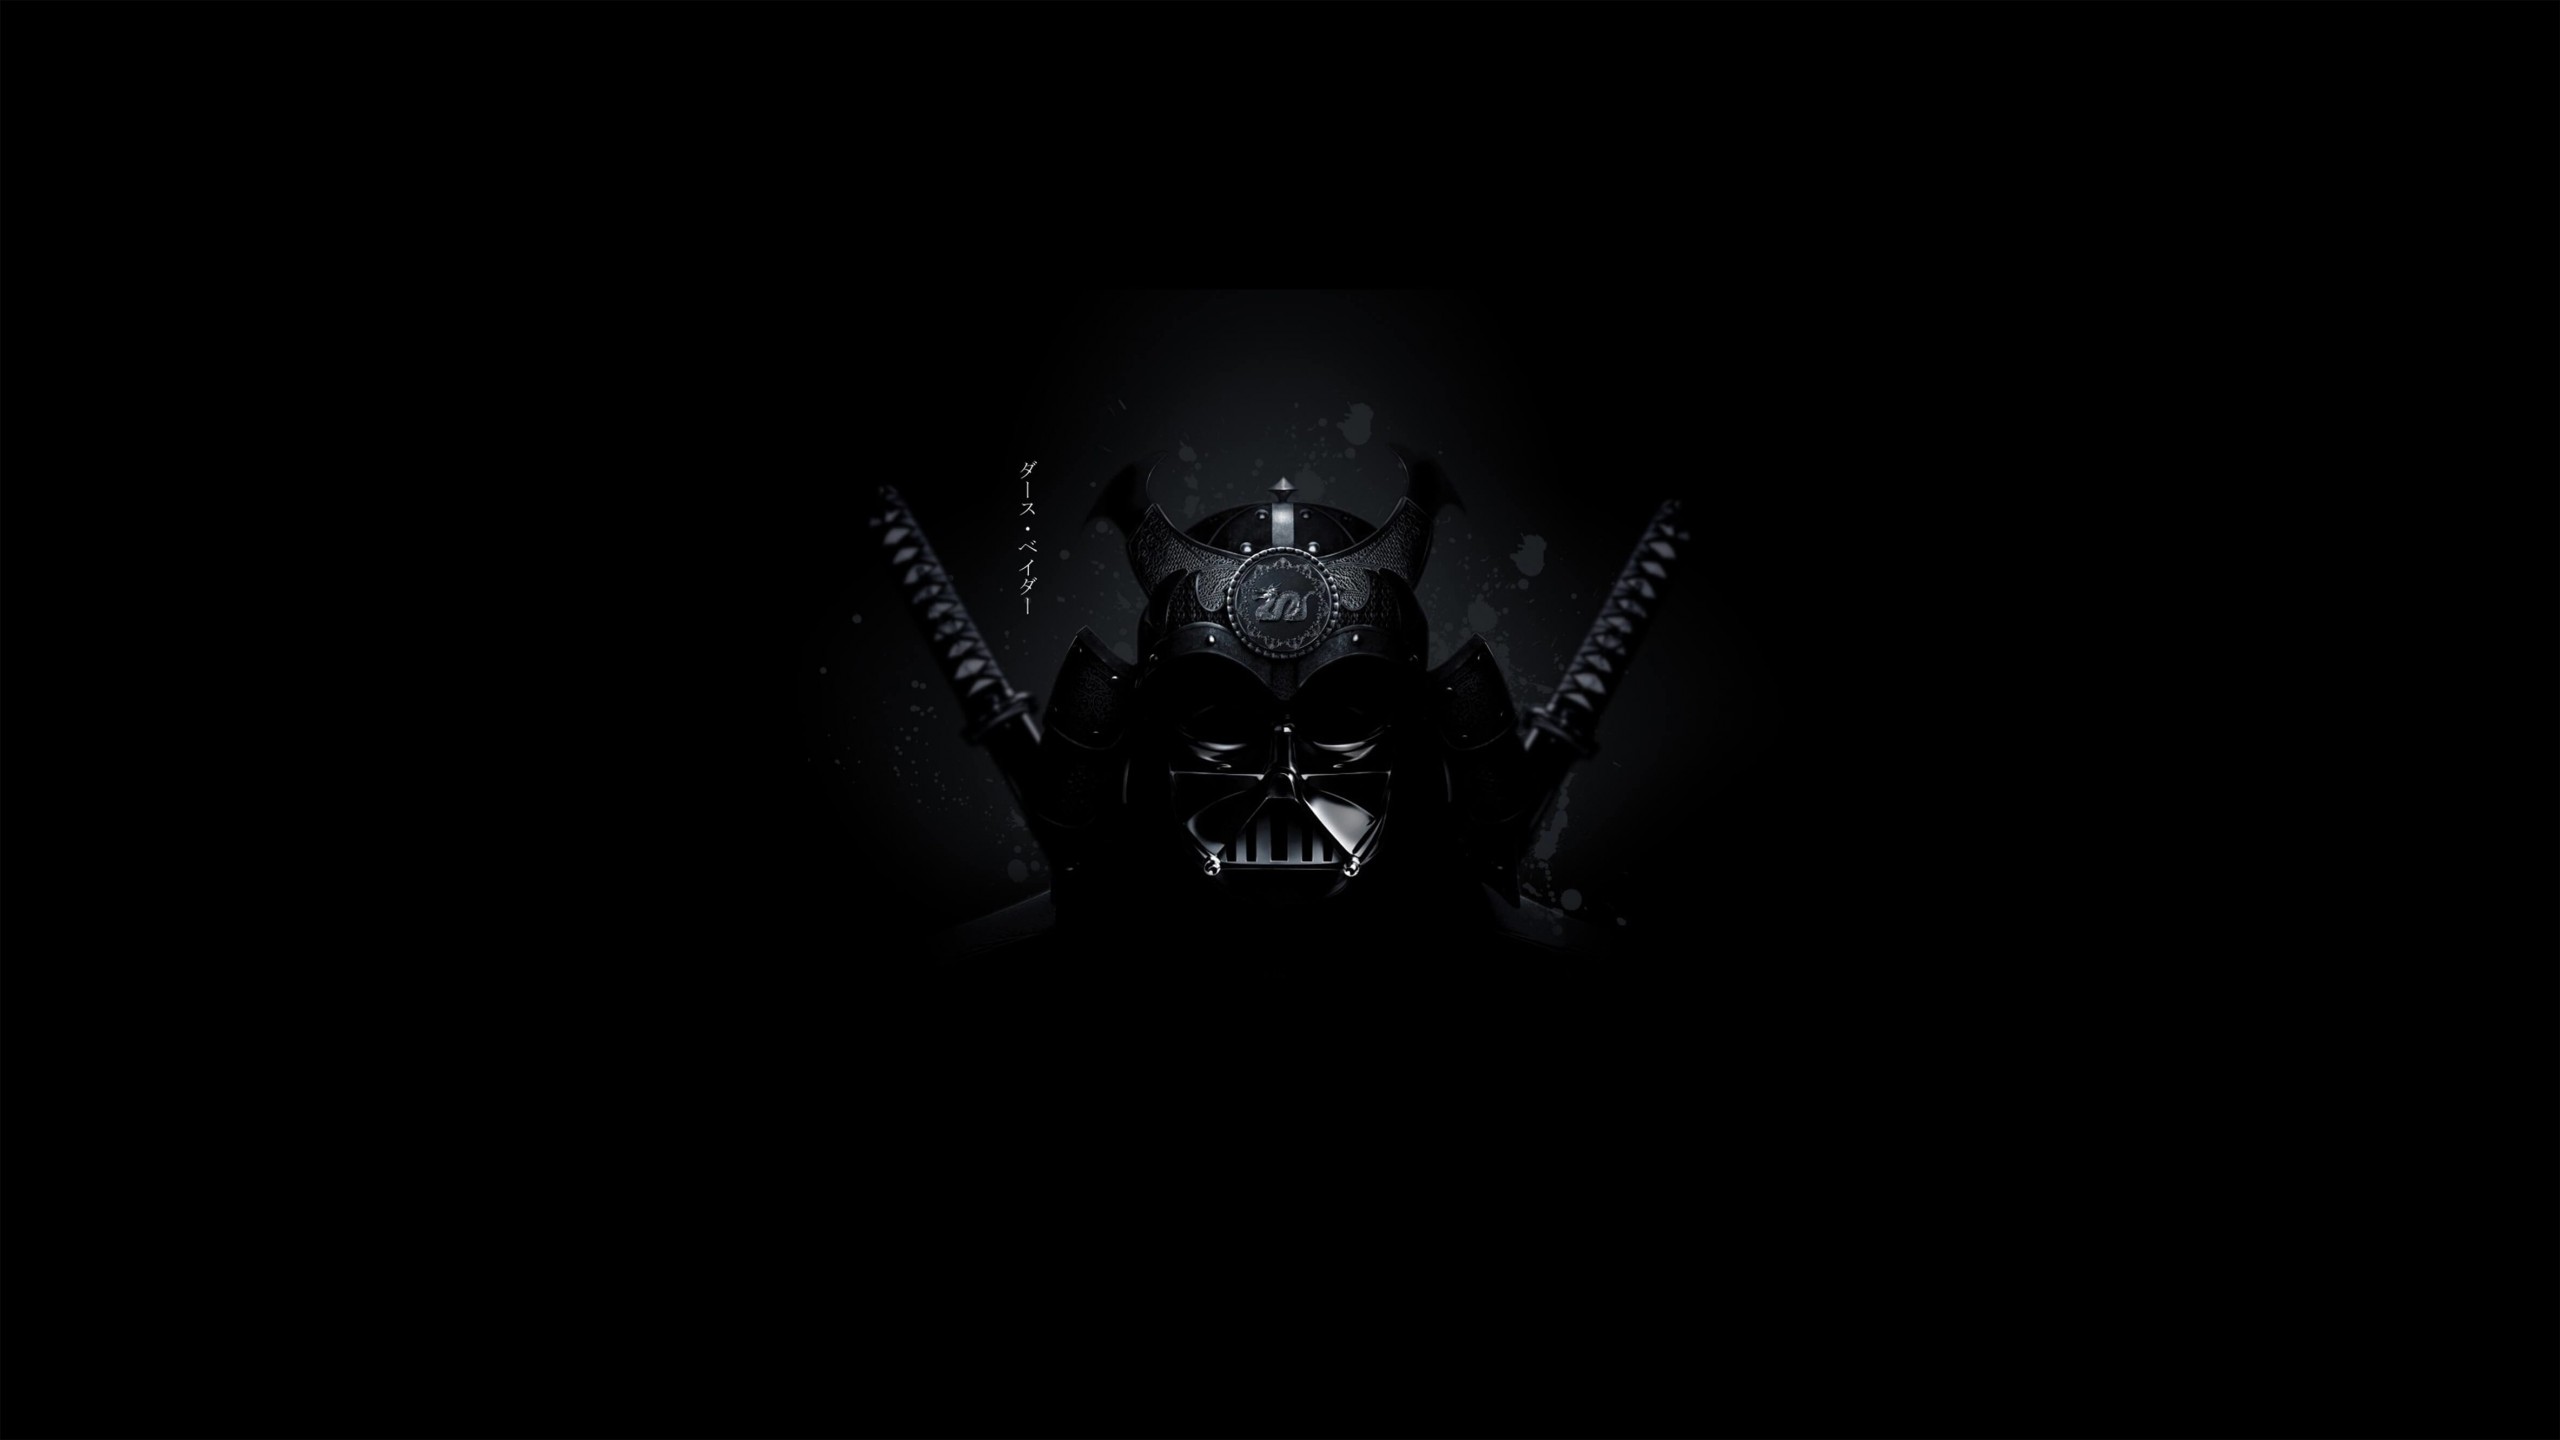 Samurai Darth Vader Wallpaper for Desktop 2560x1440